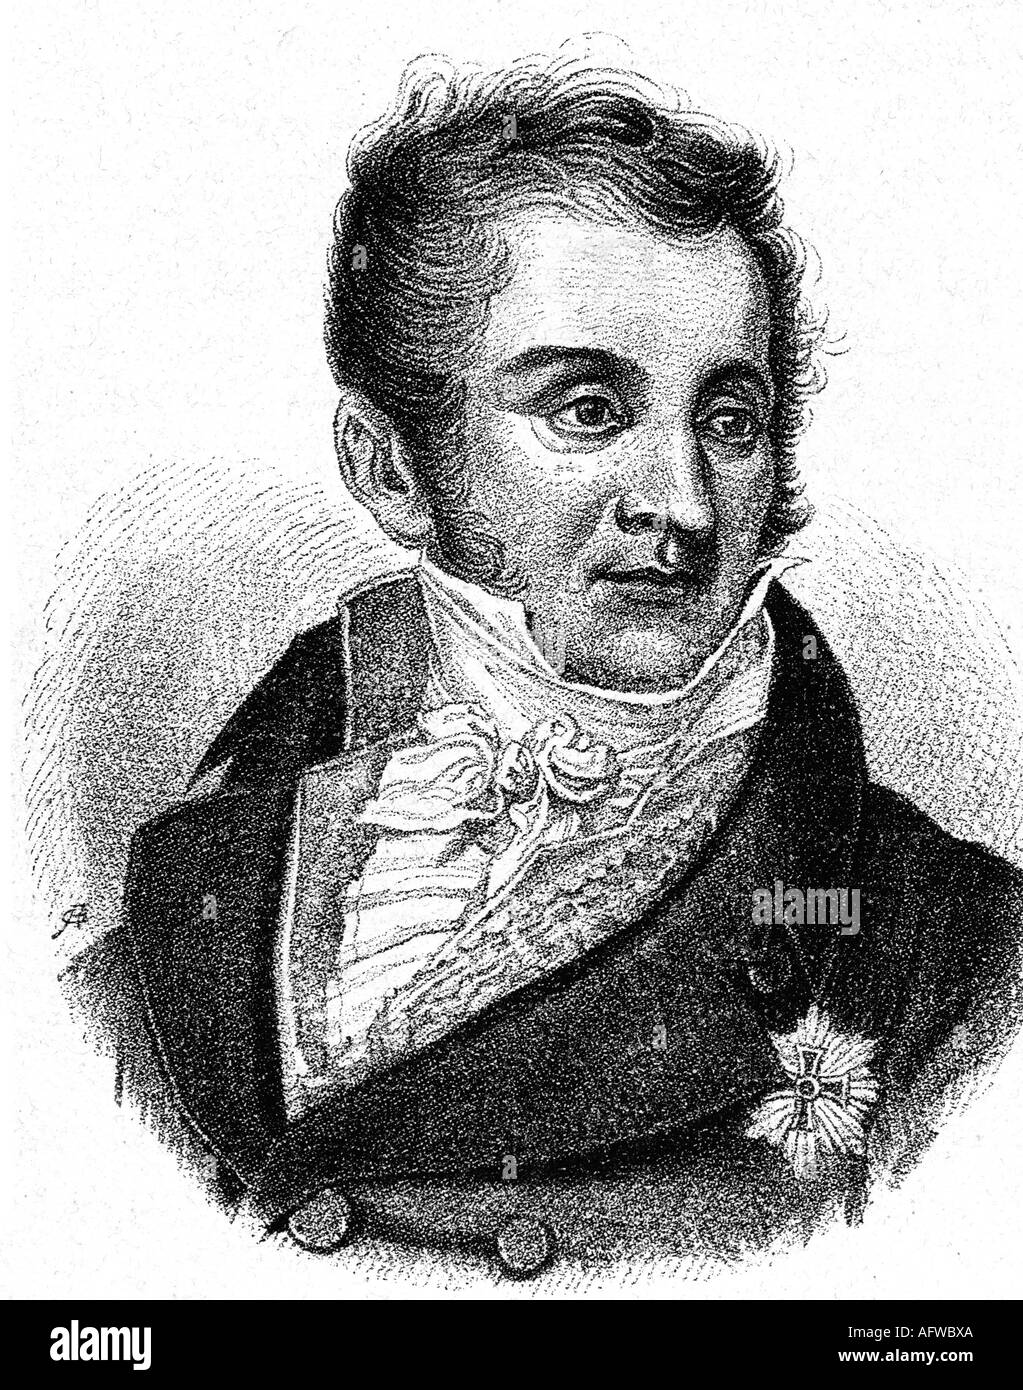 Czartoryski, Adam Jerzy, 14.1.1770 - 15.7.1861, polnischer Politiker, Porträt, Gravur, 19. Jahrhundert, Stockfoto